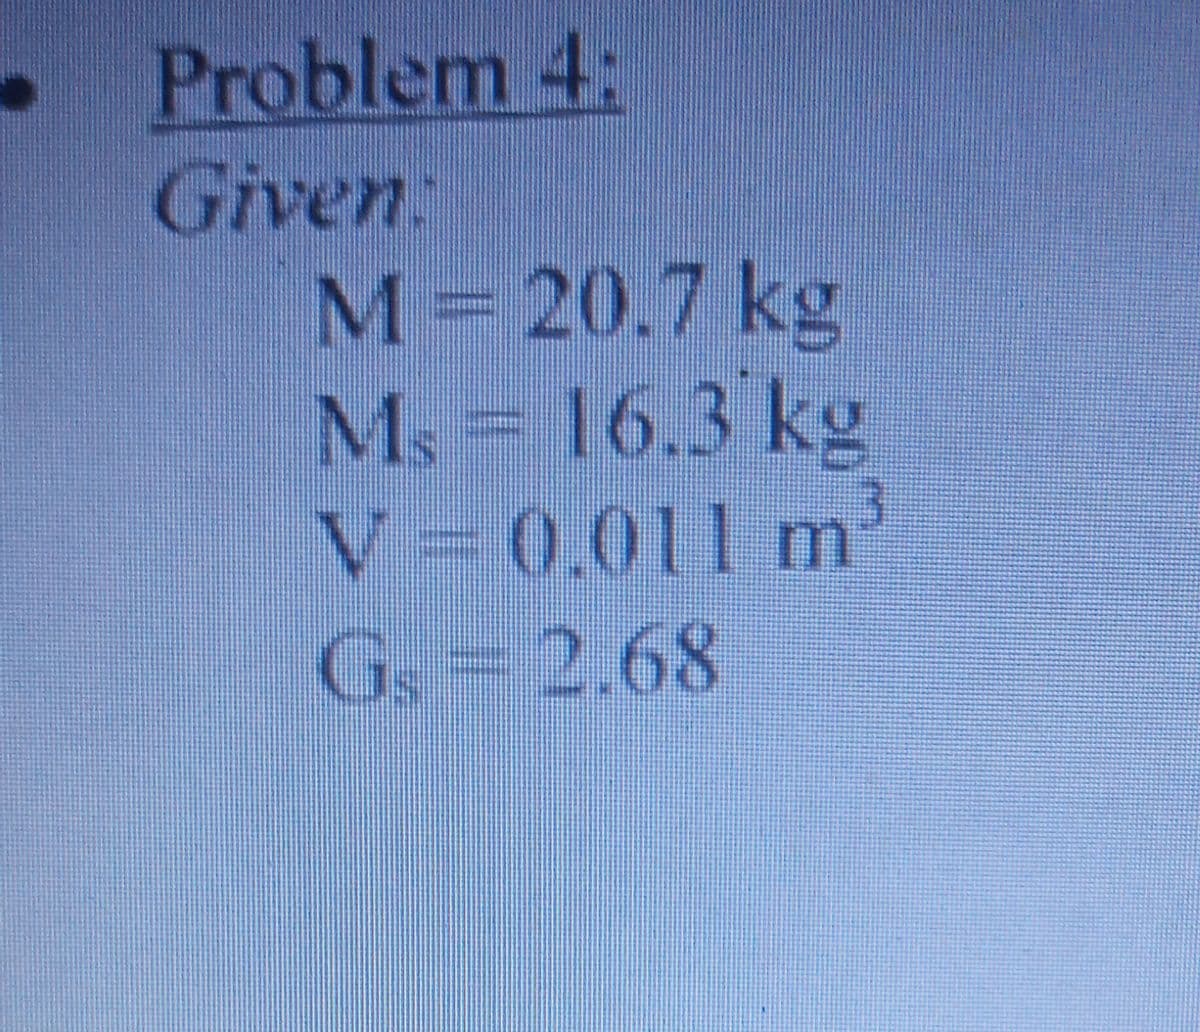 Problem 4:
Given:
M 20.7 kg
Ms = 16.3 kg
V= 0.011 m'
Gs- 2.68
